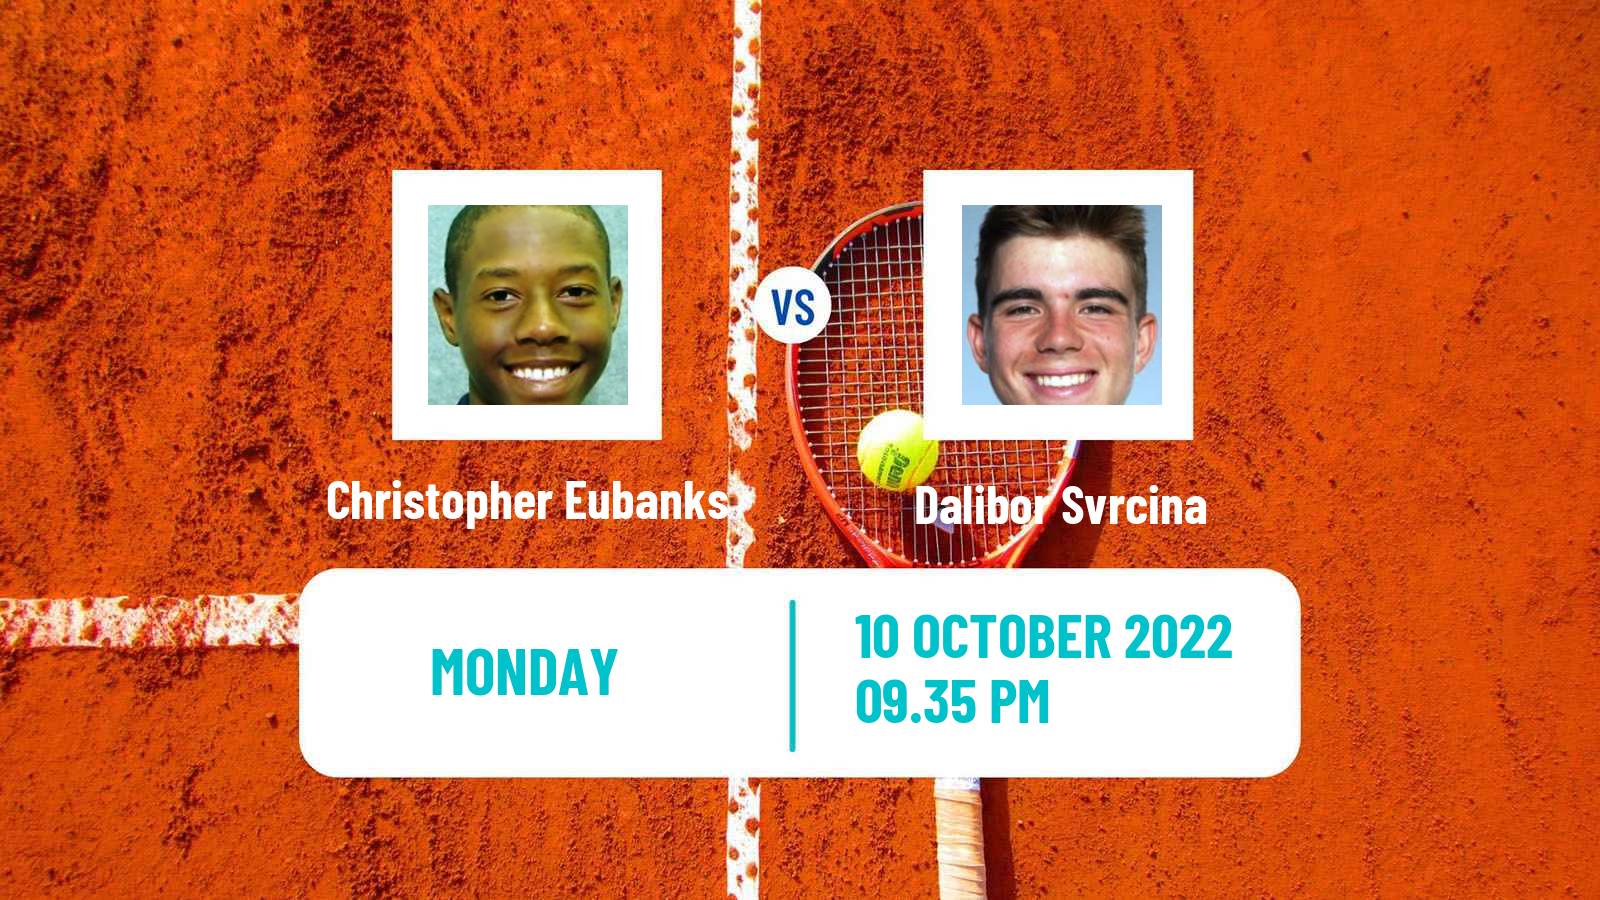 Tennis ATP Challenger Christopher Eubanks - Dalibor Svrcina